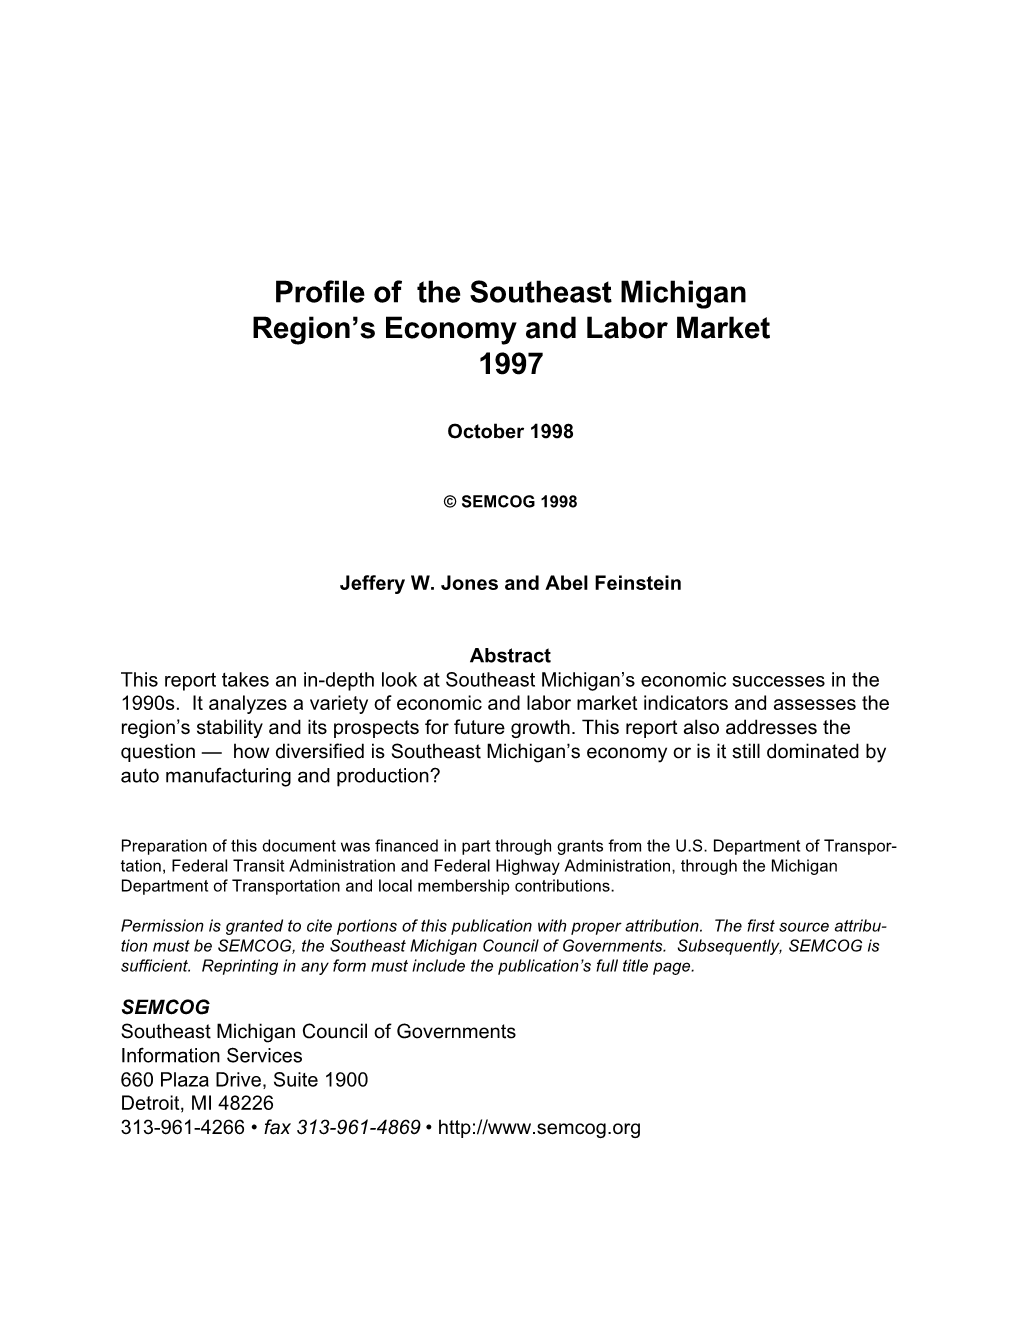 Profile of the Southeast Michigan Region's Economy and Labor